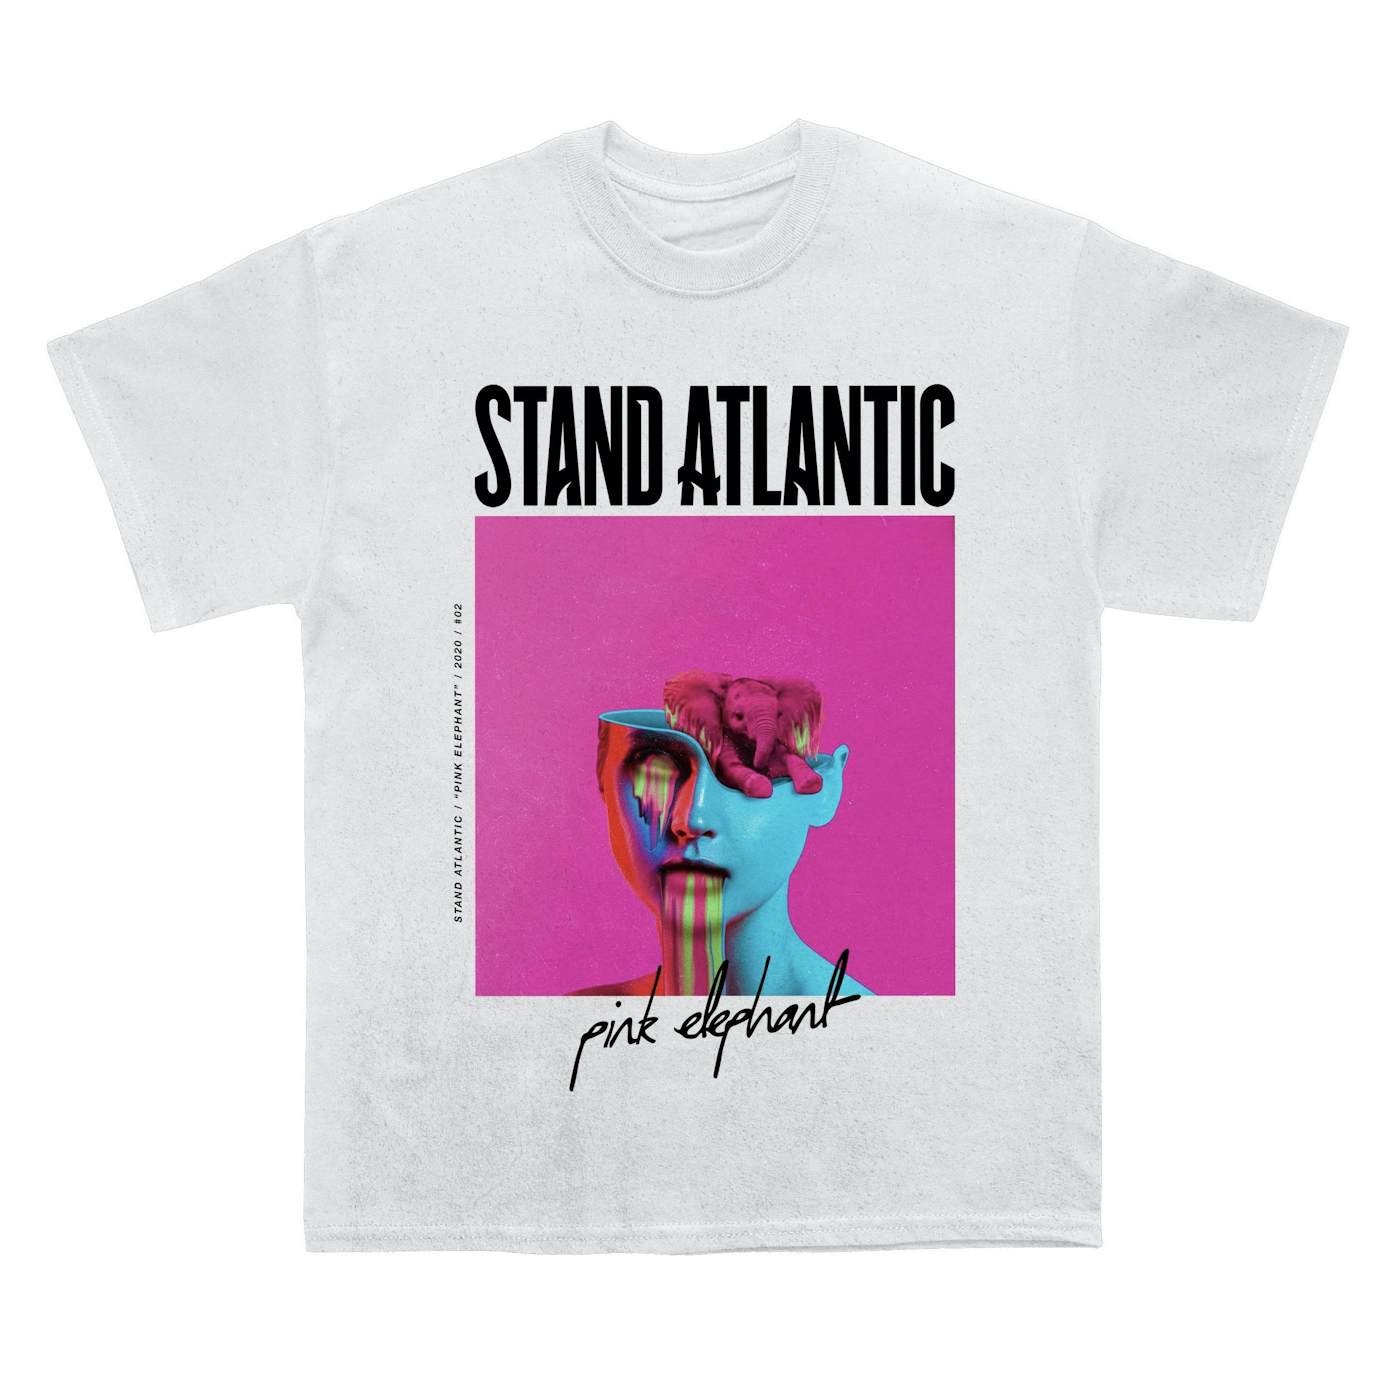 Stand Atlantic Pink Elephant Tee (White)